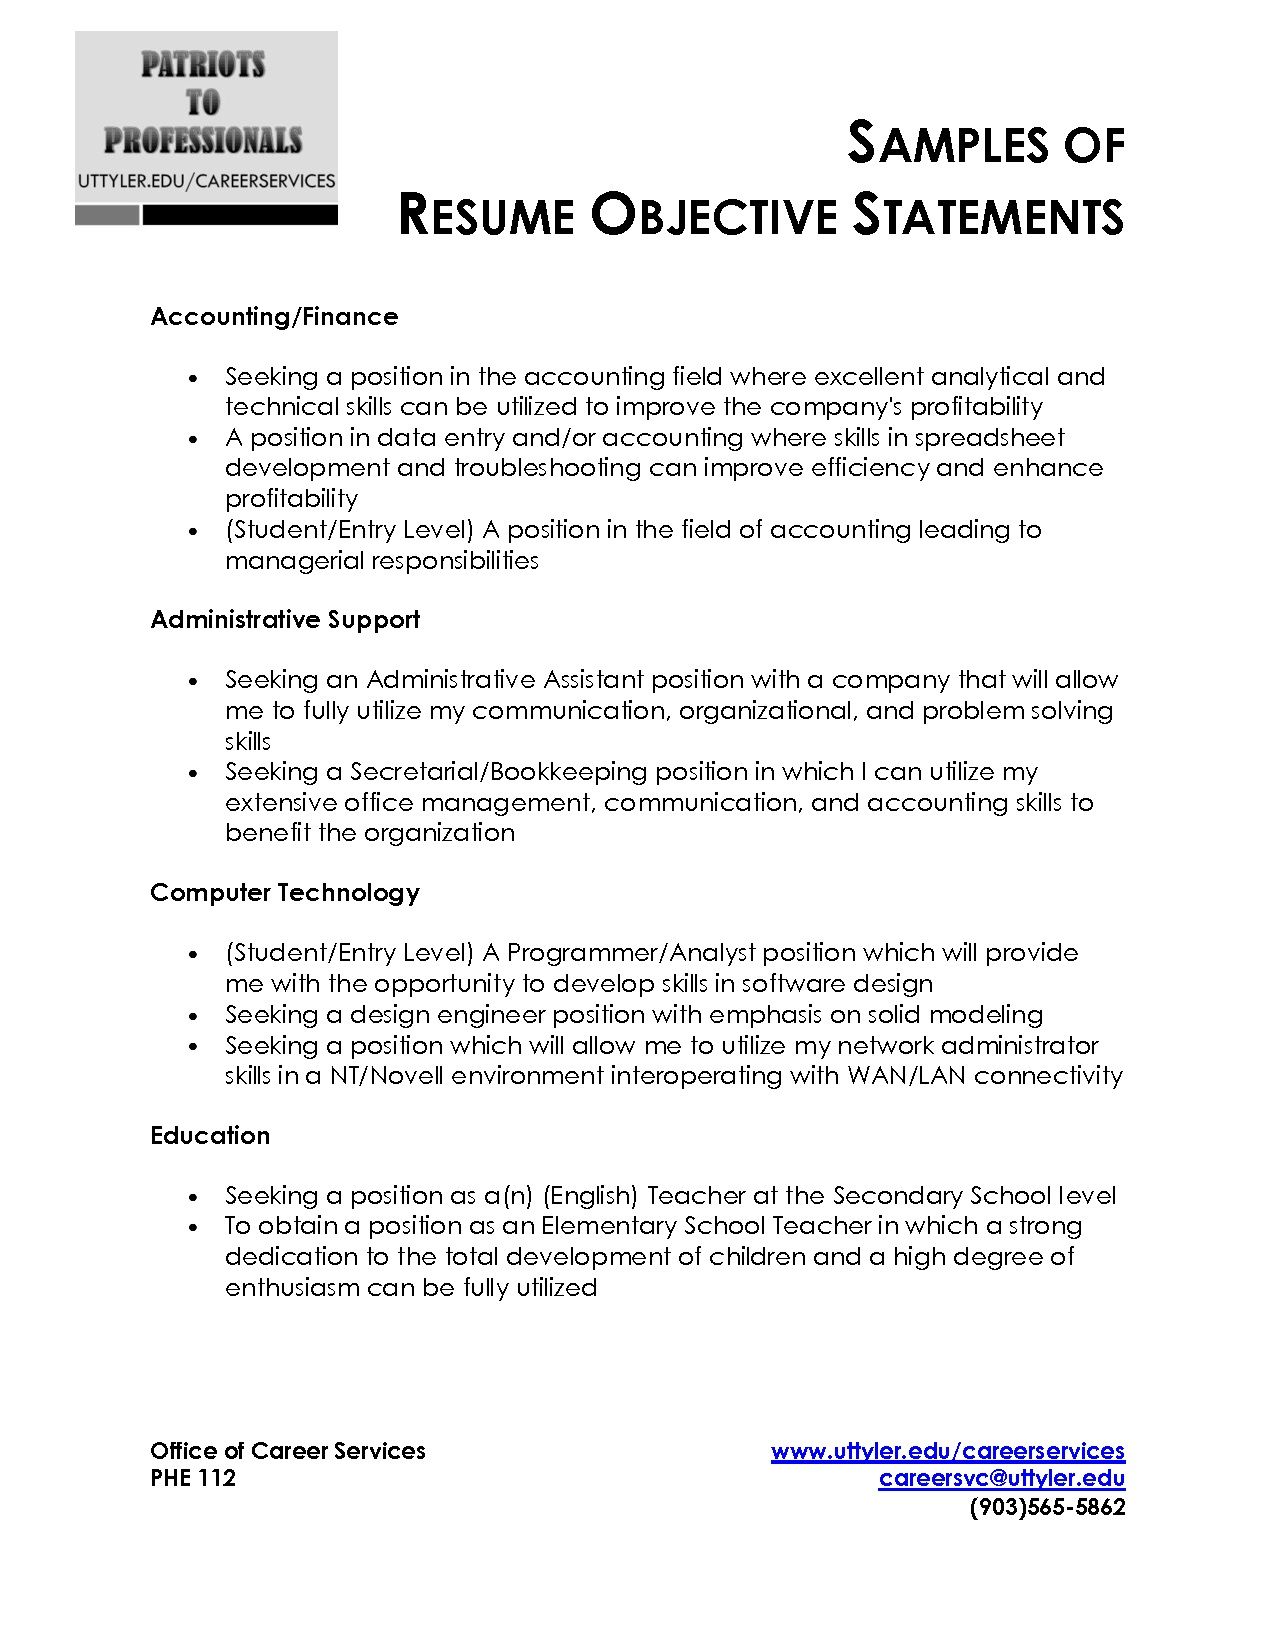 Sample Resume Objective Statement